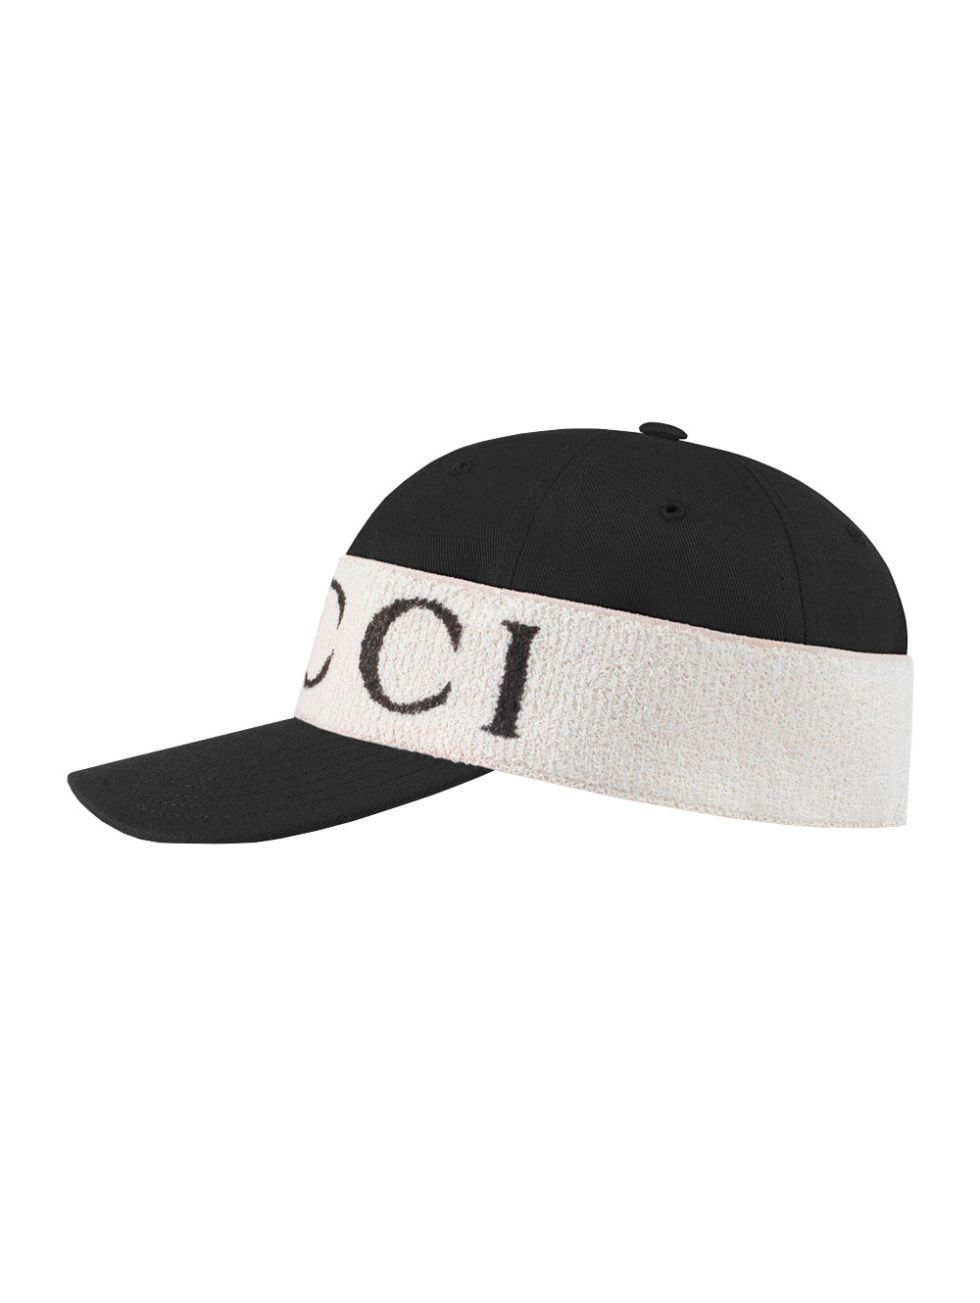 Cap, Hat, Fashion accessory, Headgear, Costume accessory, Baseball cap, Cricket cap, Beige, Costume hat, Bonnet, 